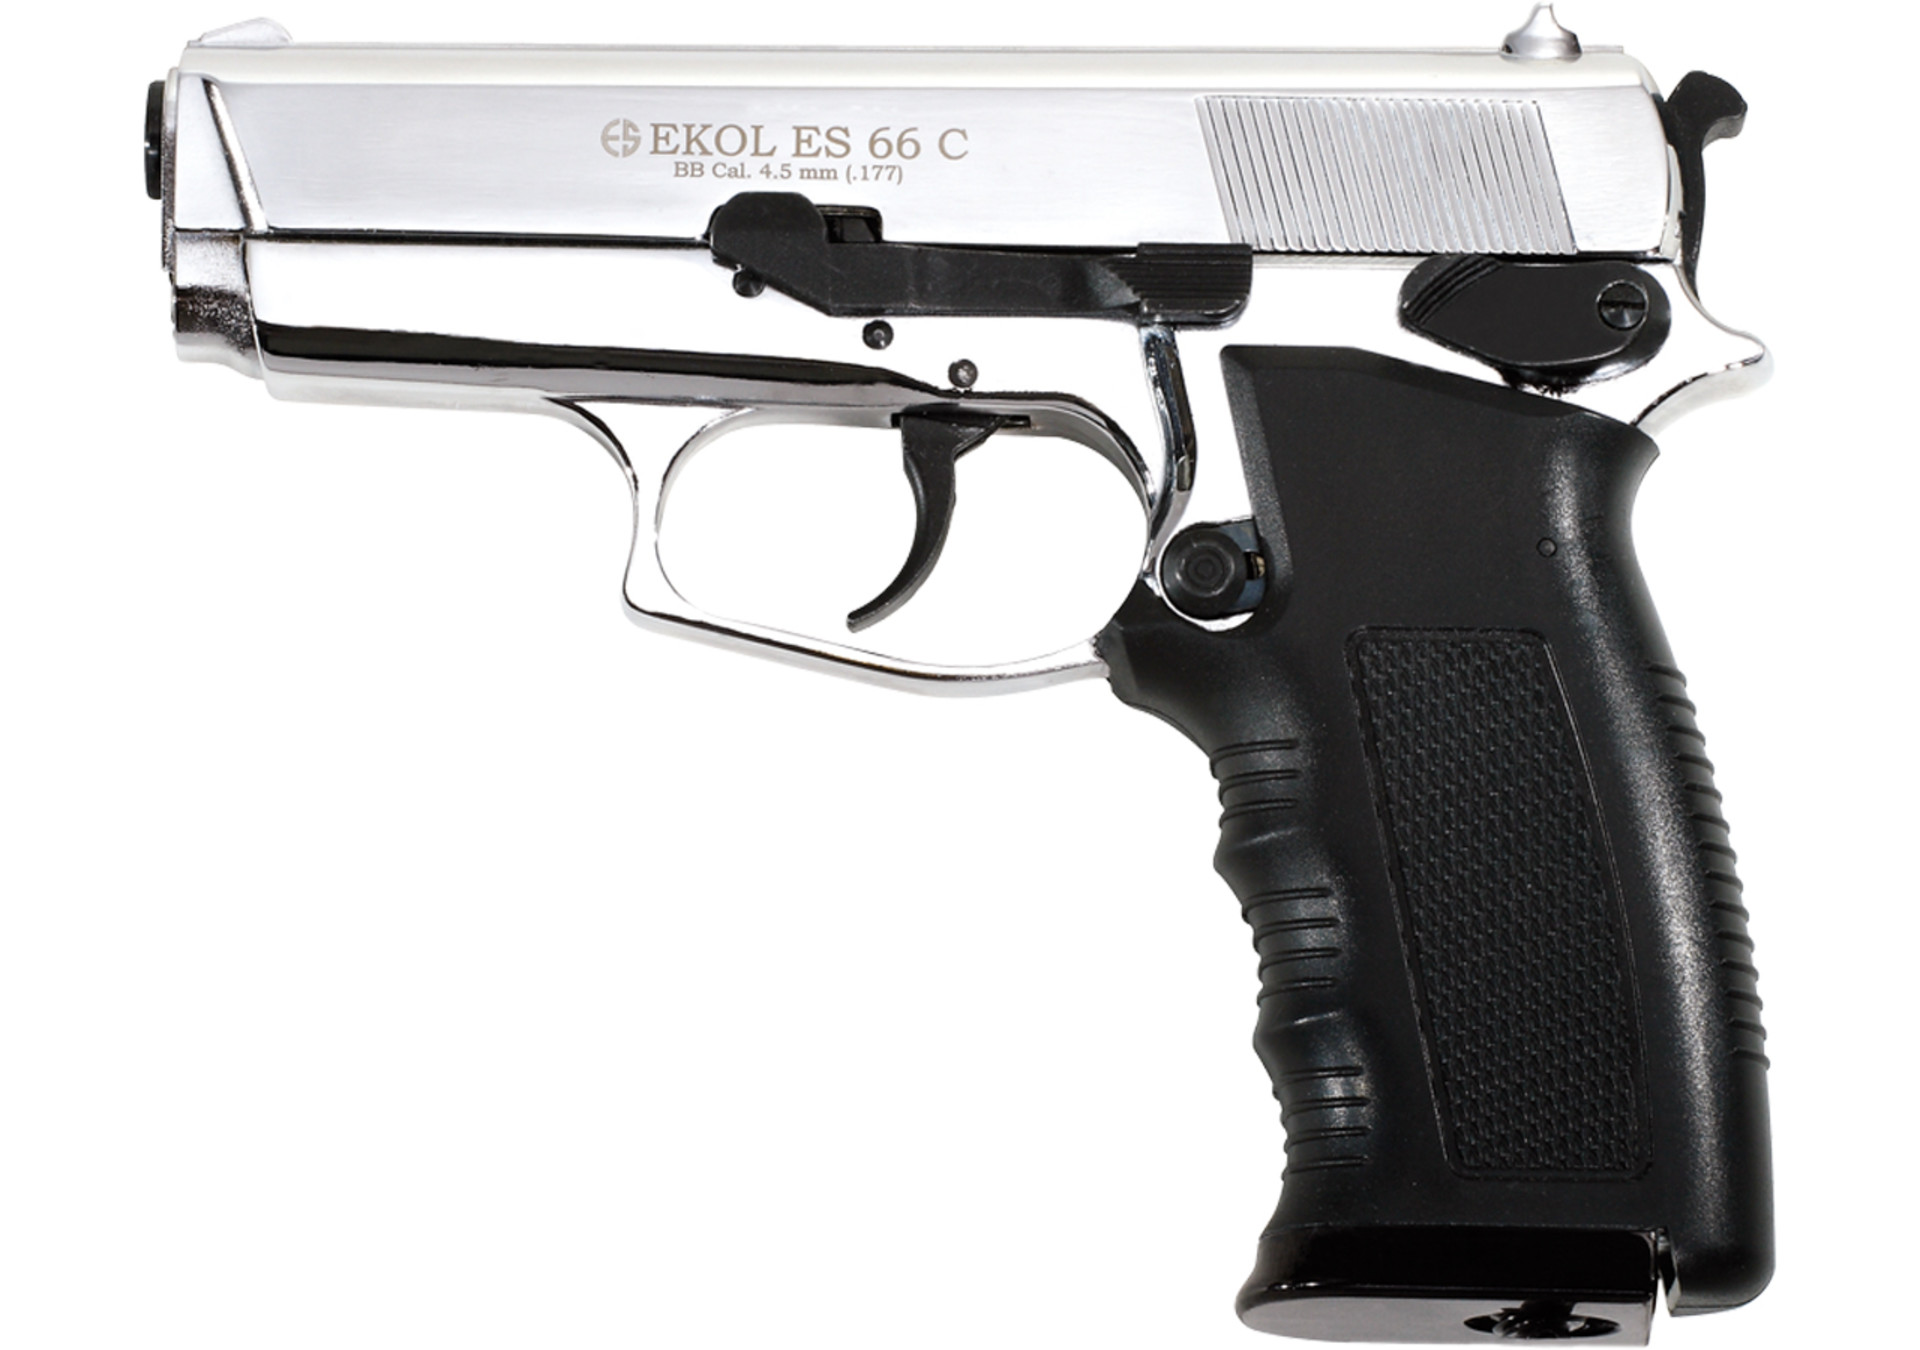 Vzduchová pistole Ekol ES 55 chrom 4,5mm